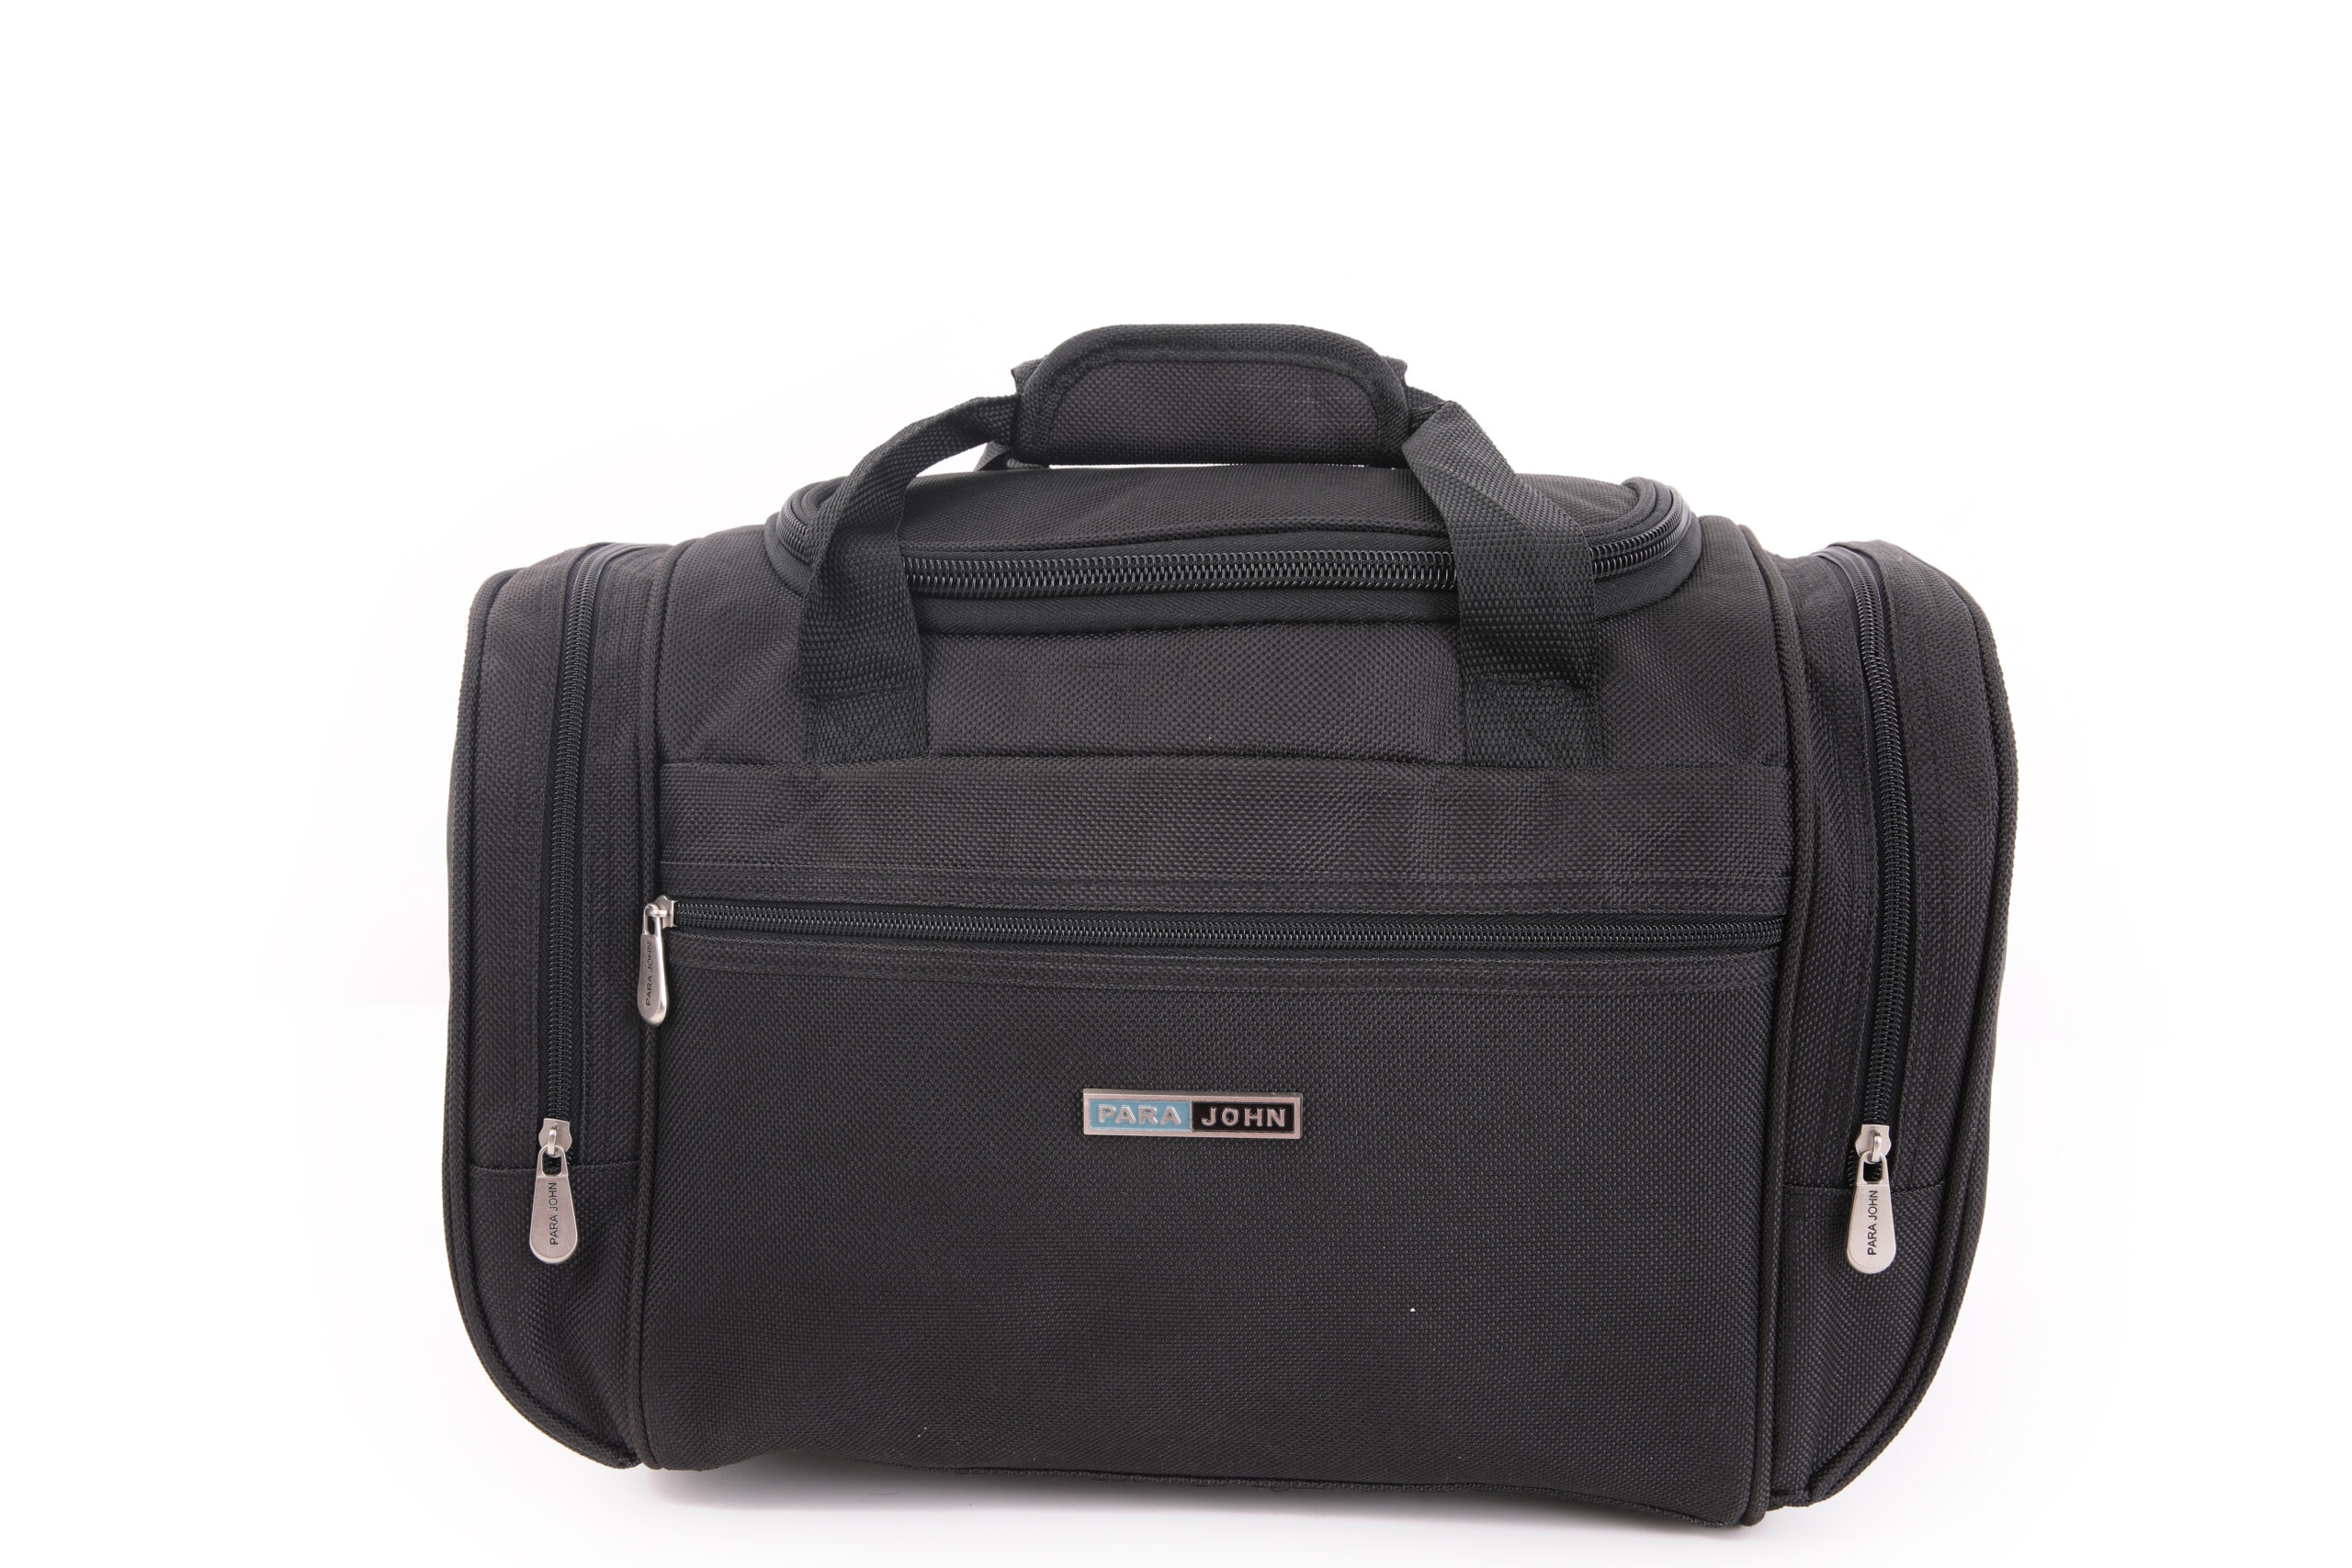 شنطة سفر (حقيبة سفر) – أسود  PARA JOHN Duffle Bag/Travel Bag